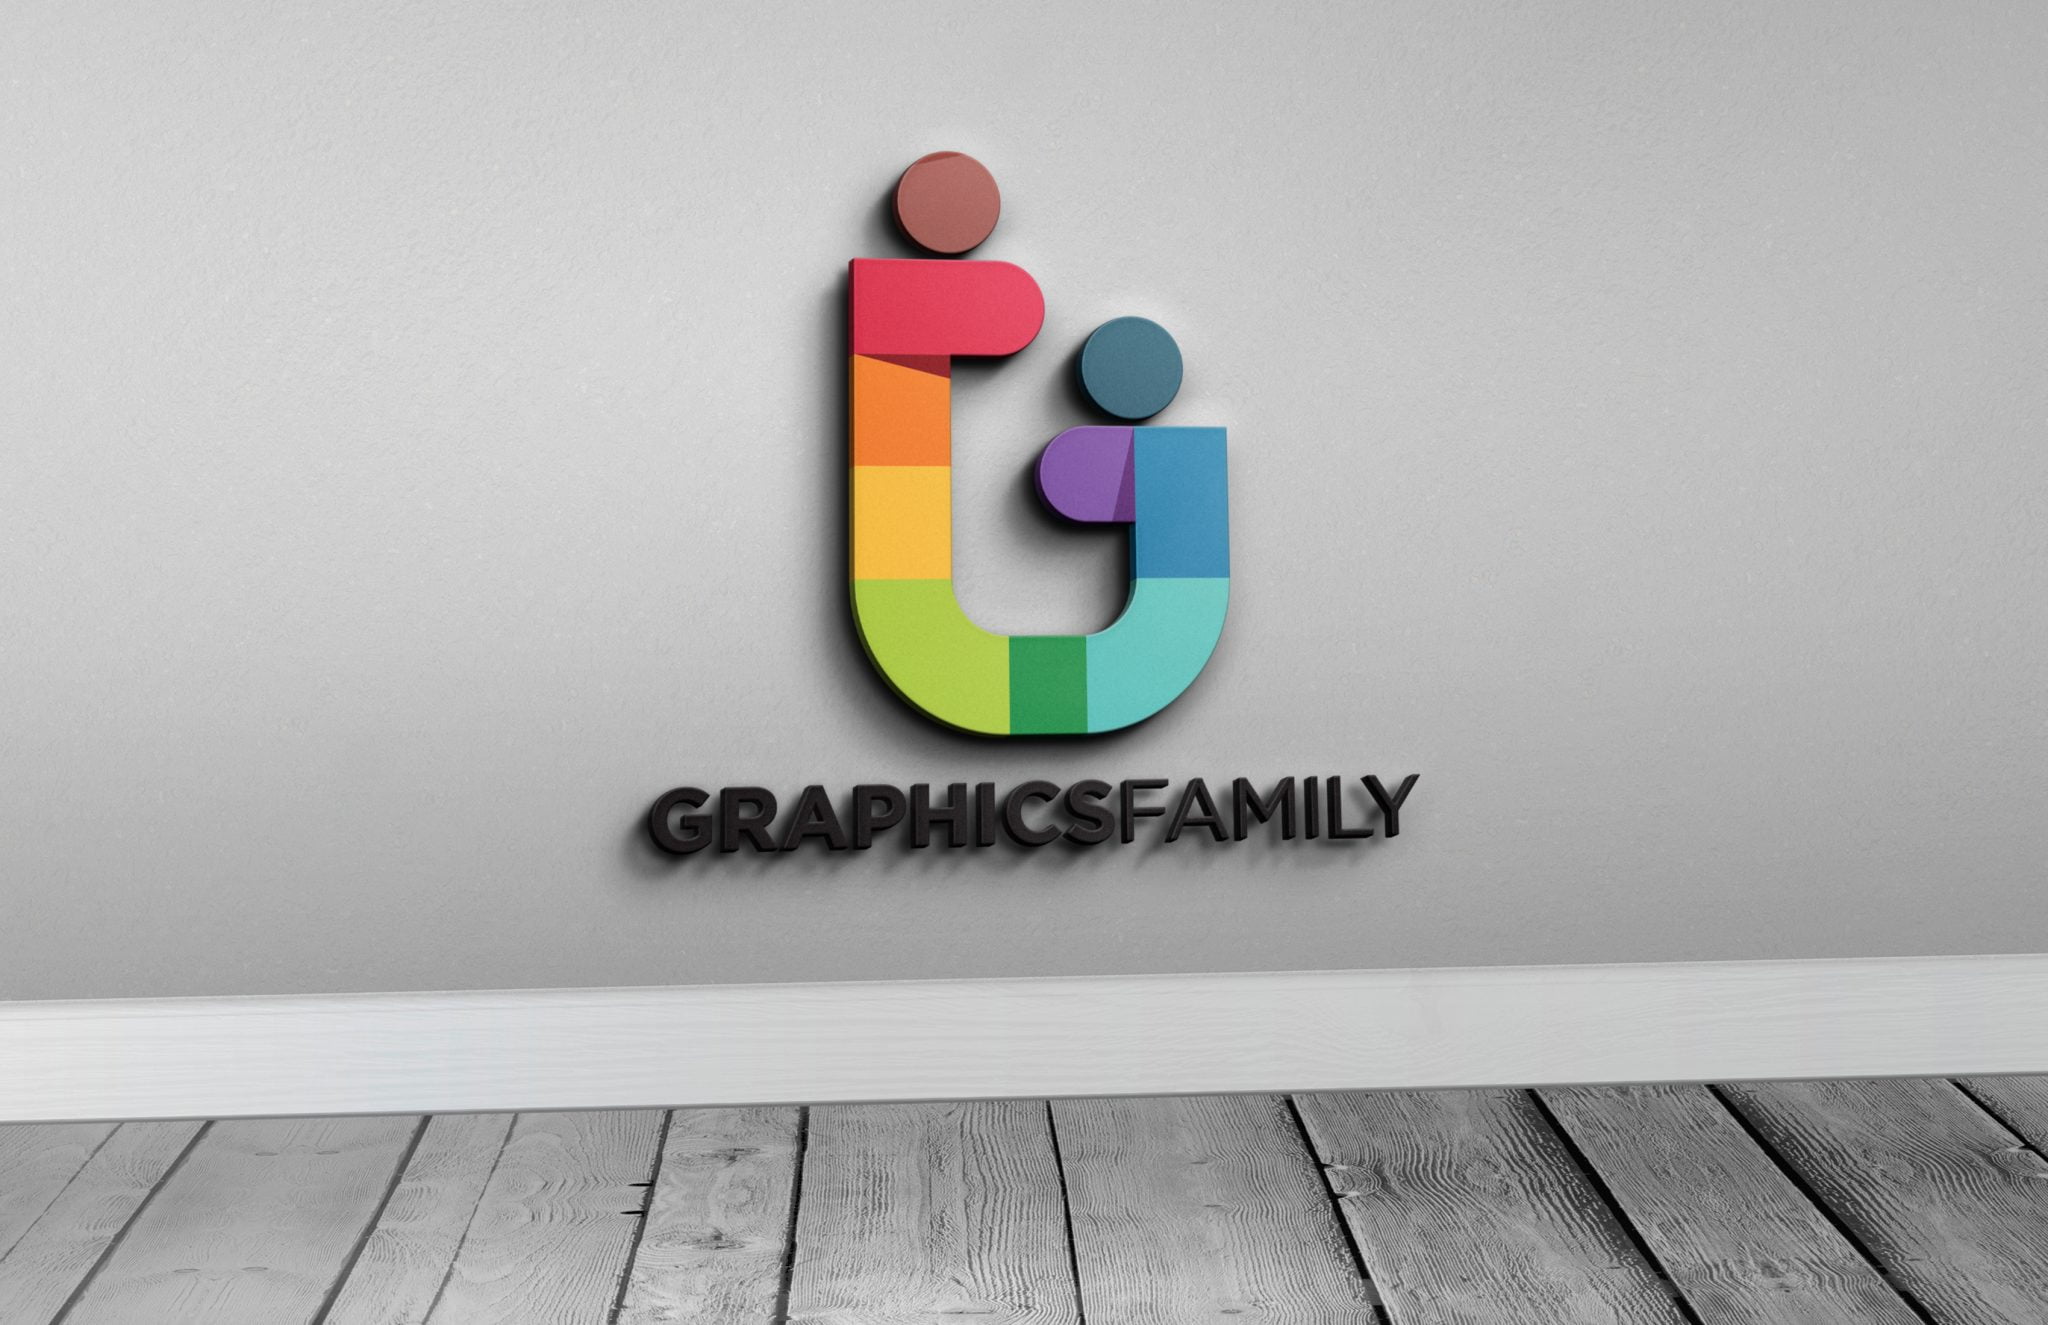 adobe photoshop 3d logo mockup free download